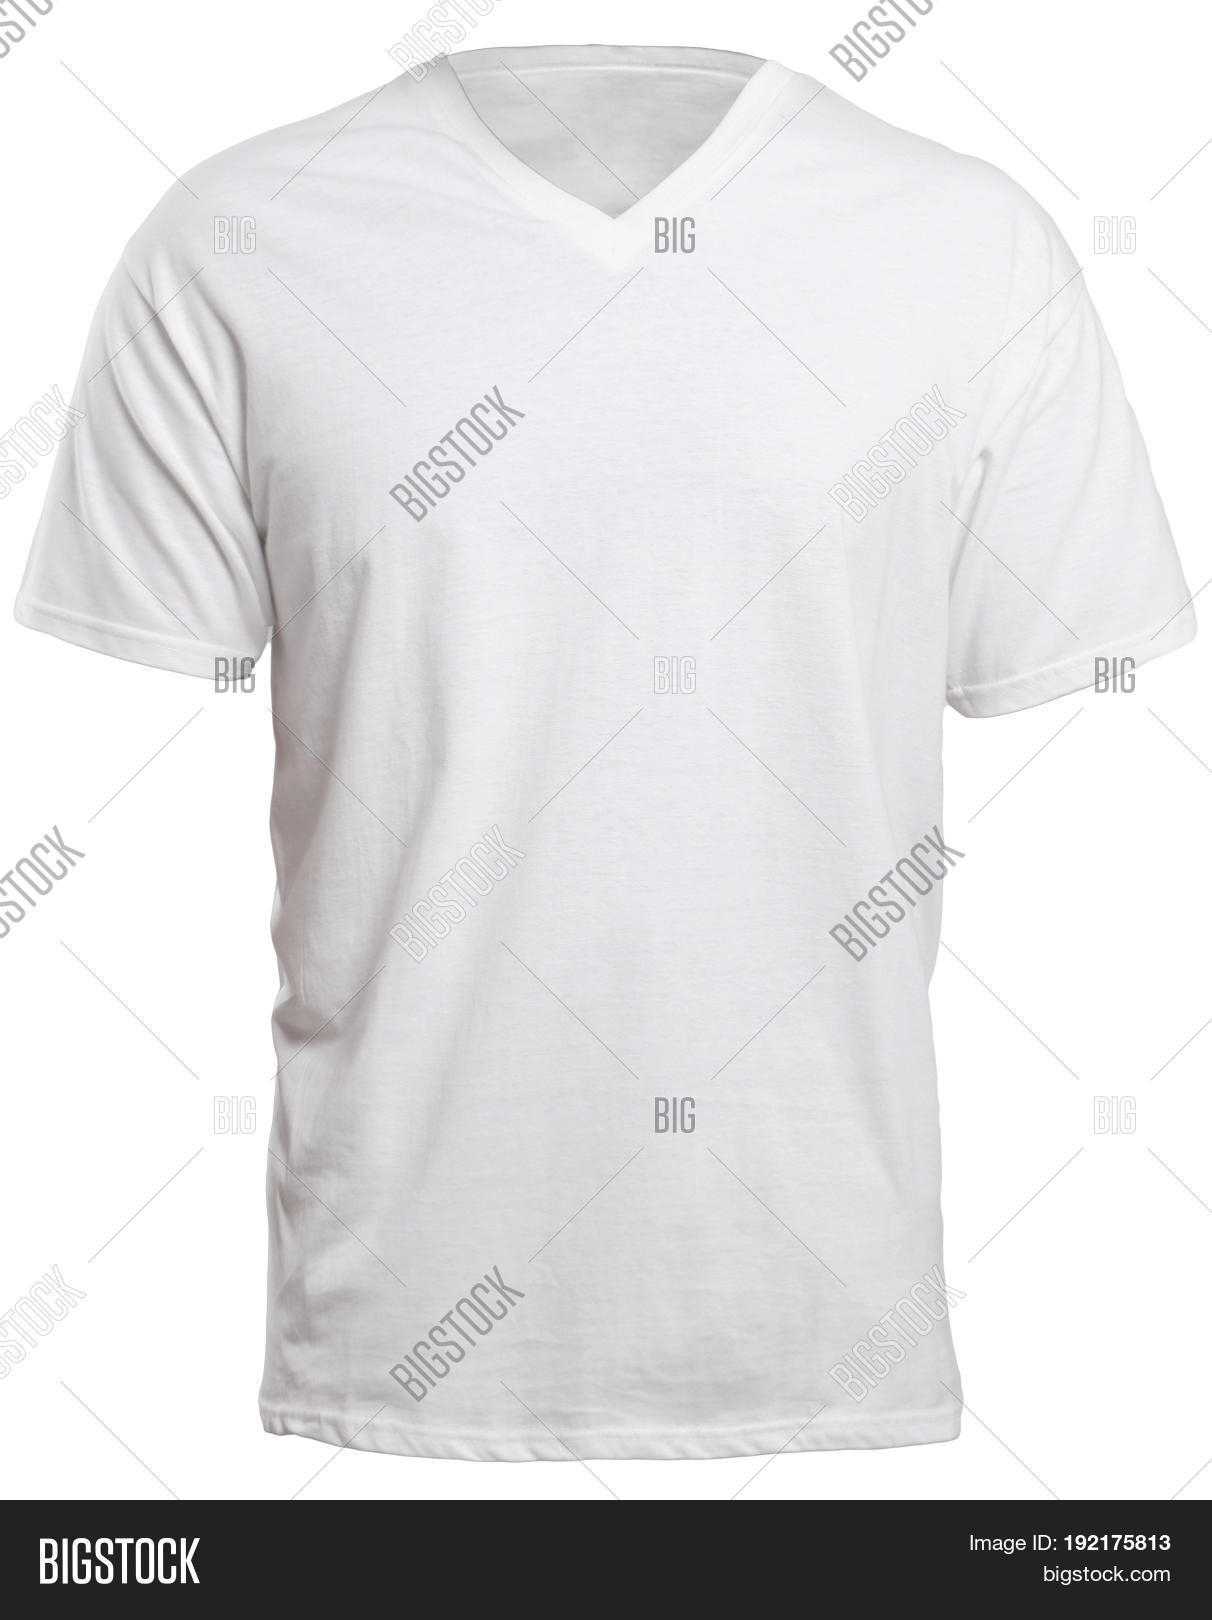 Blank V Neck Shirt Image & Photo (Free Trial) | Bigstock Throughout Blank V Neck T Shirt Template